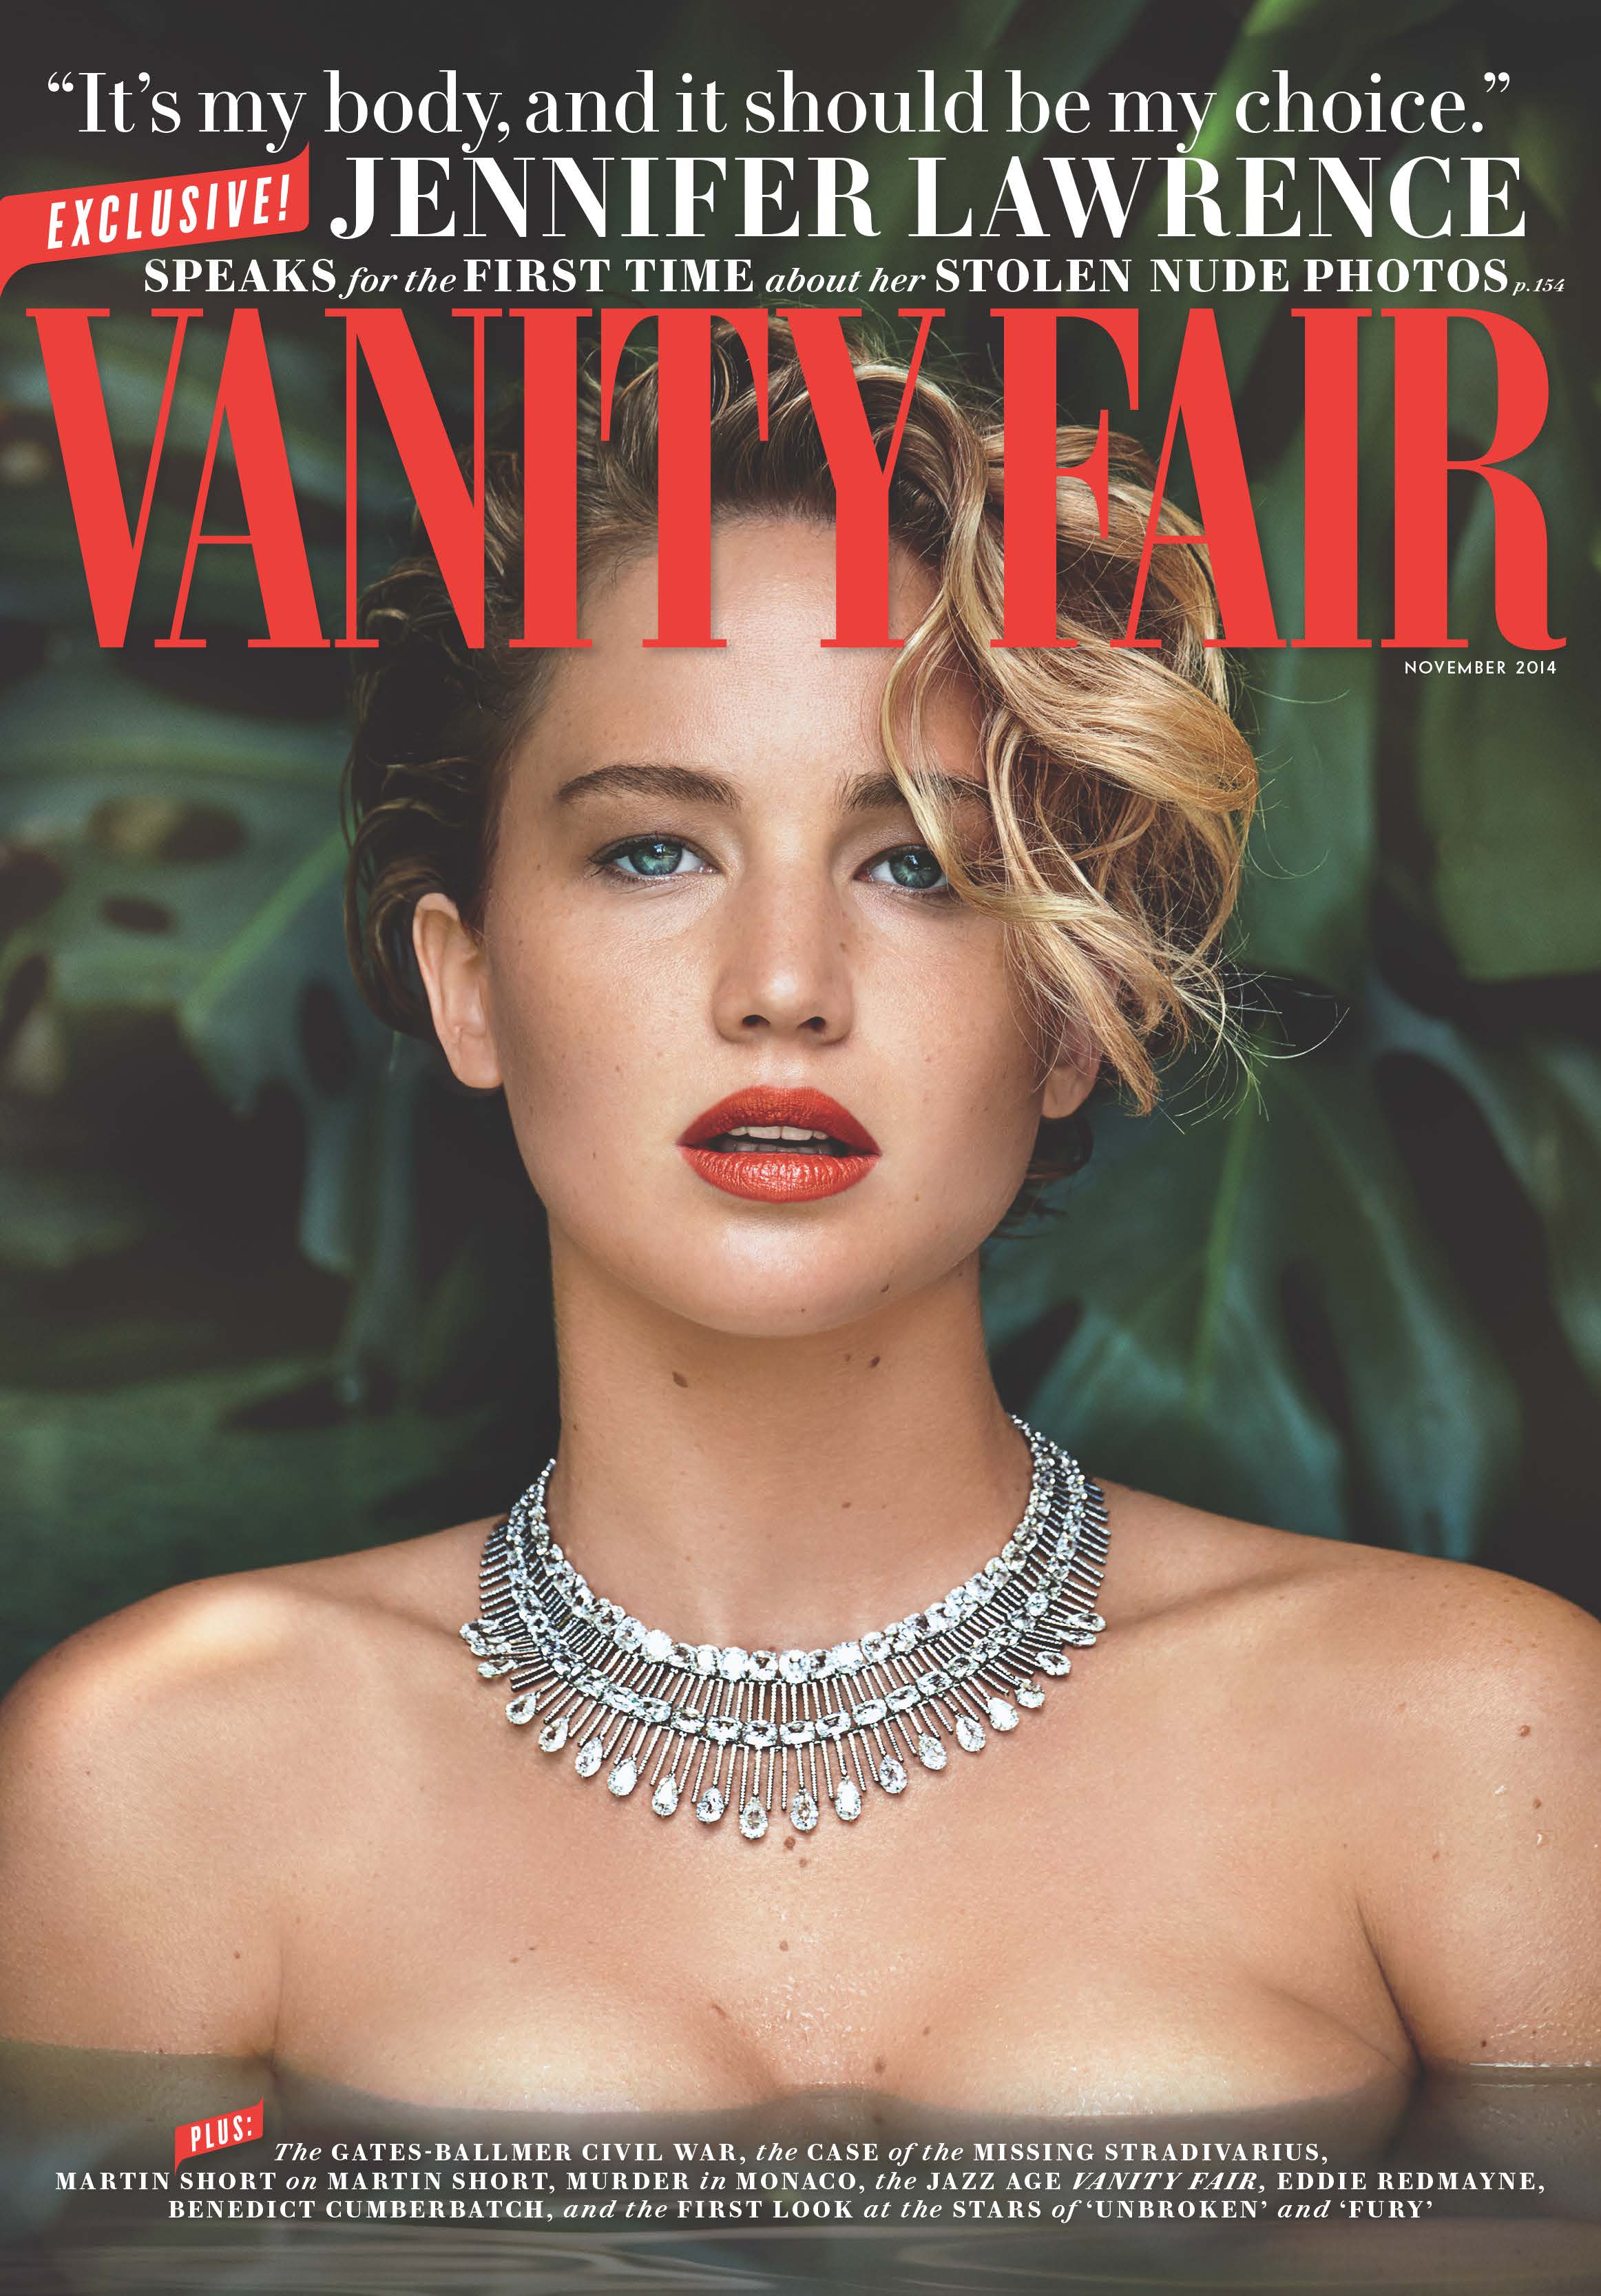 Vanity Fair-November 2014, "Jennifer Lawrence"